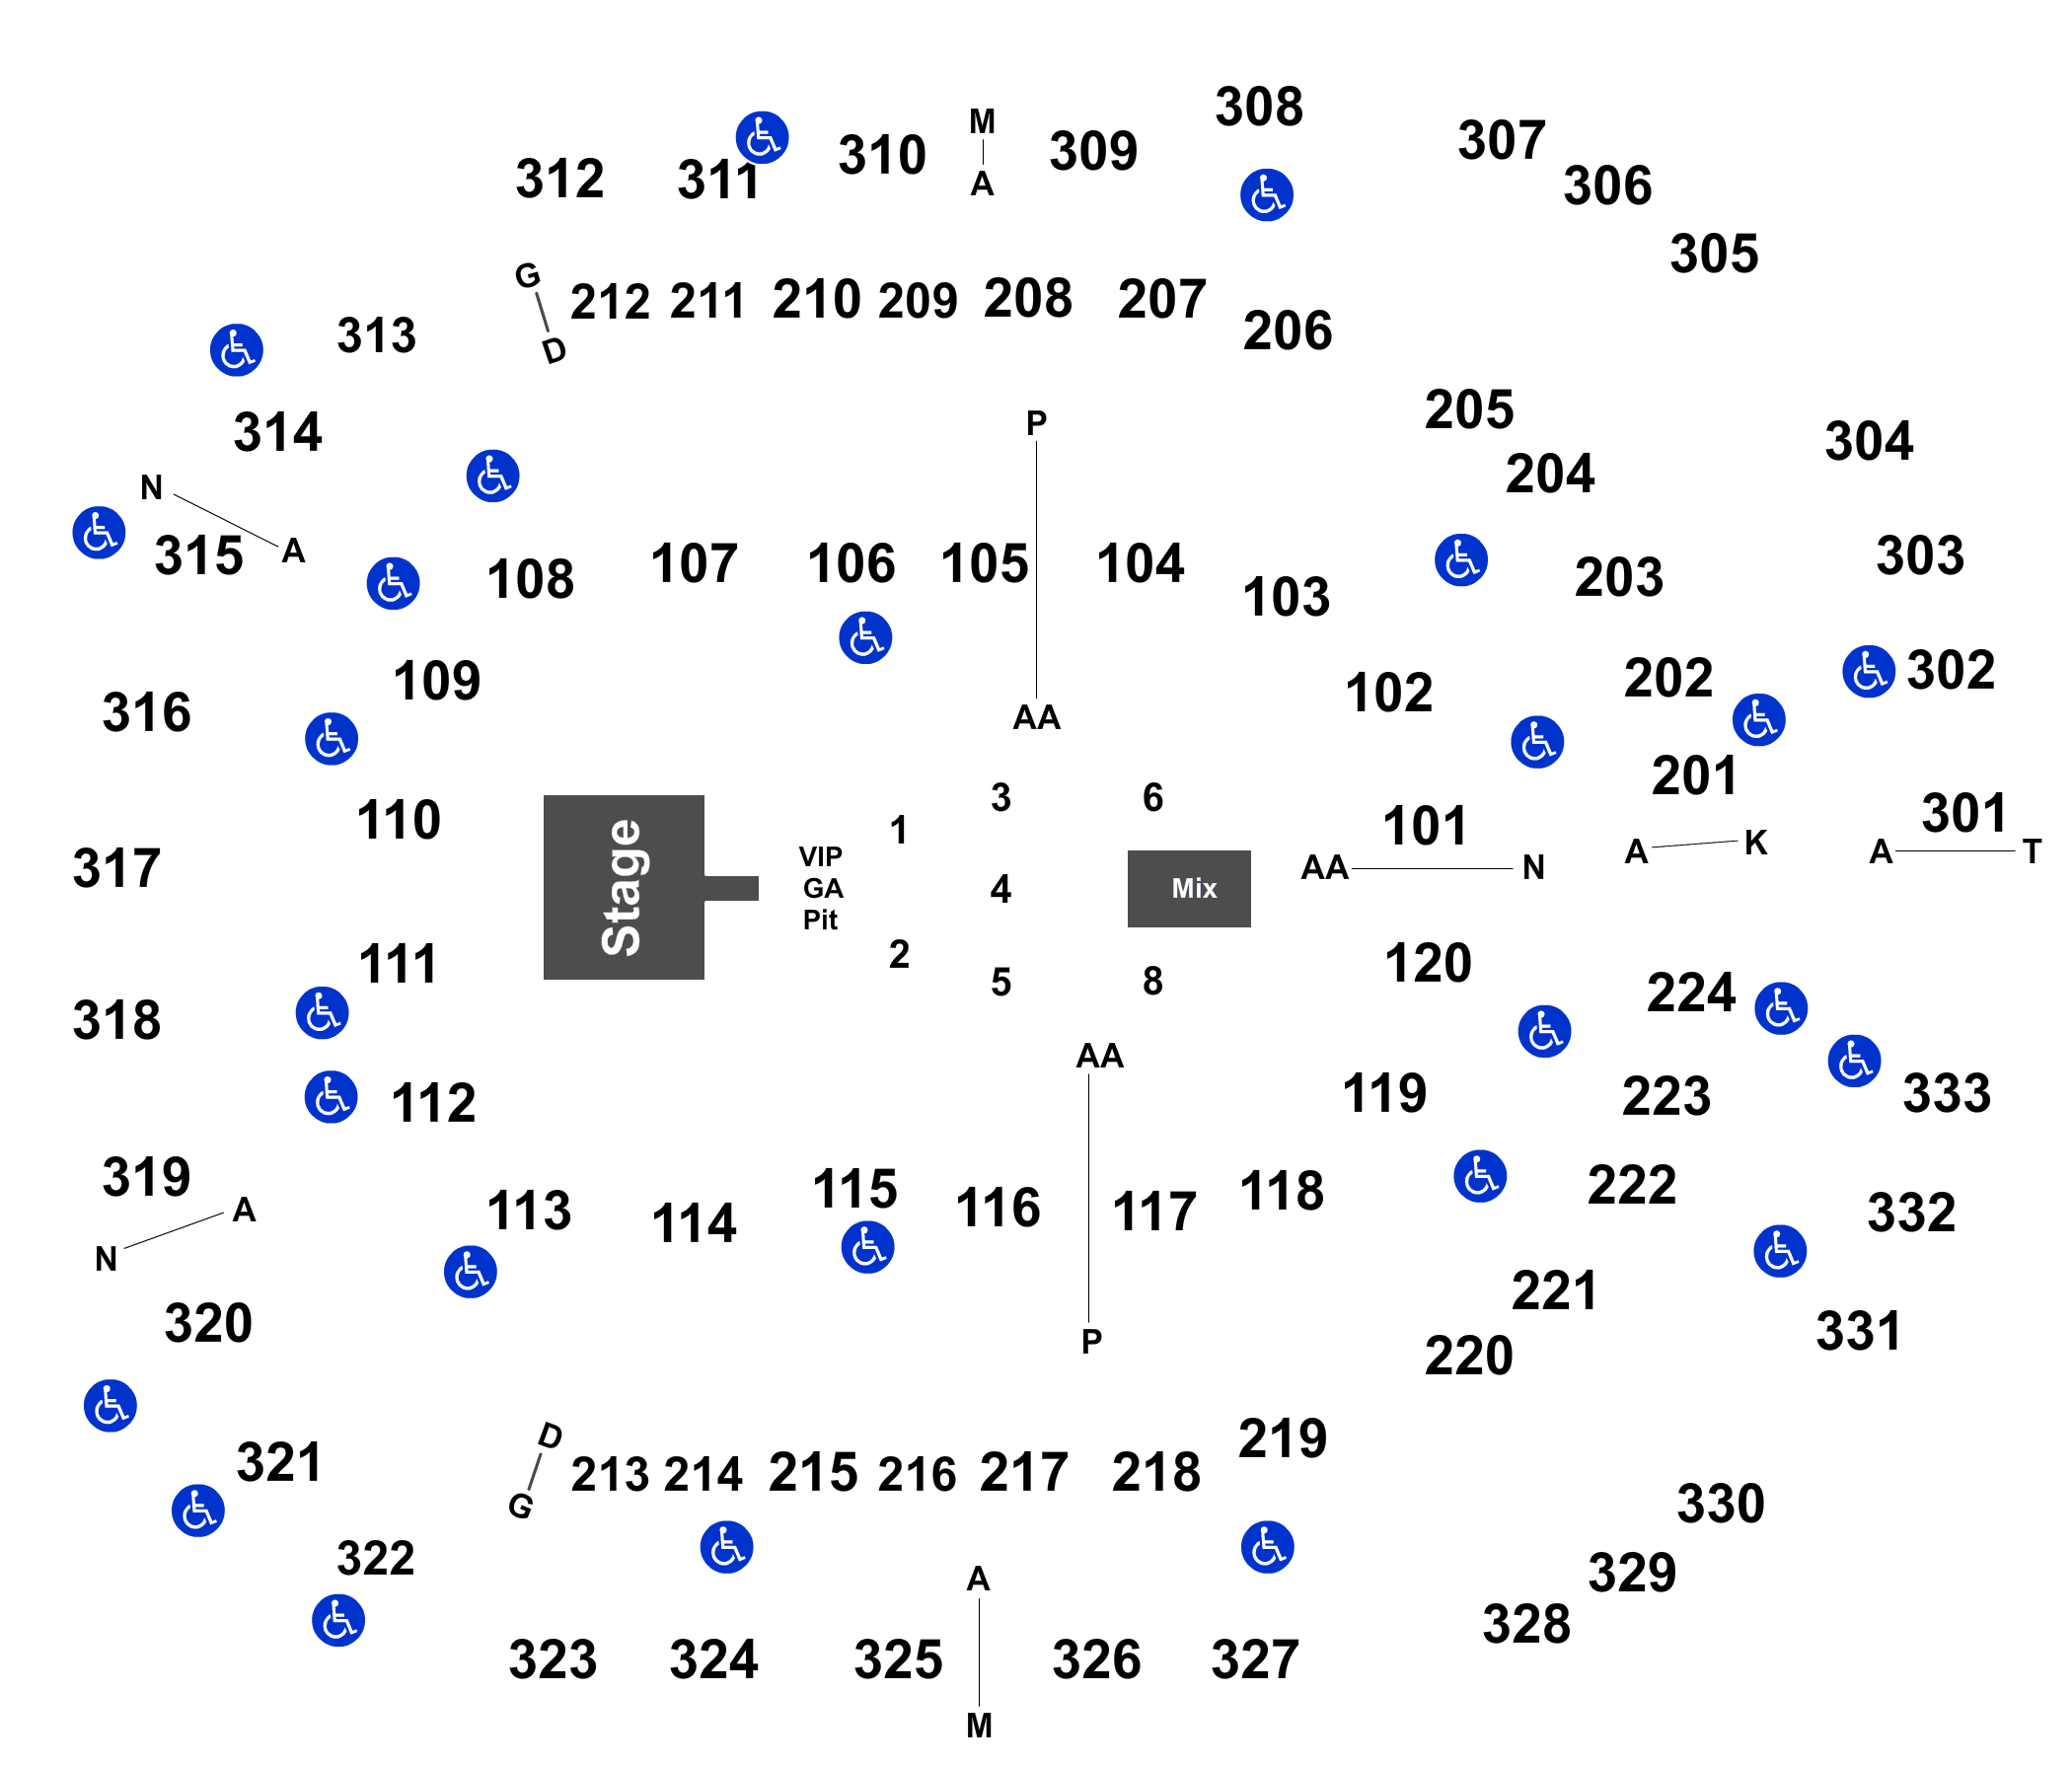 Section 215 at Bridgestone Arena 